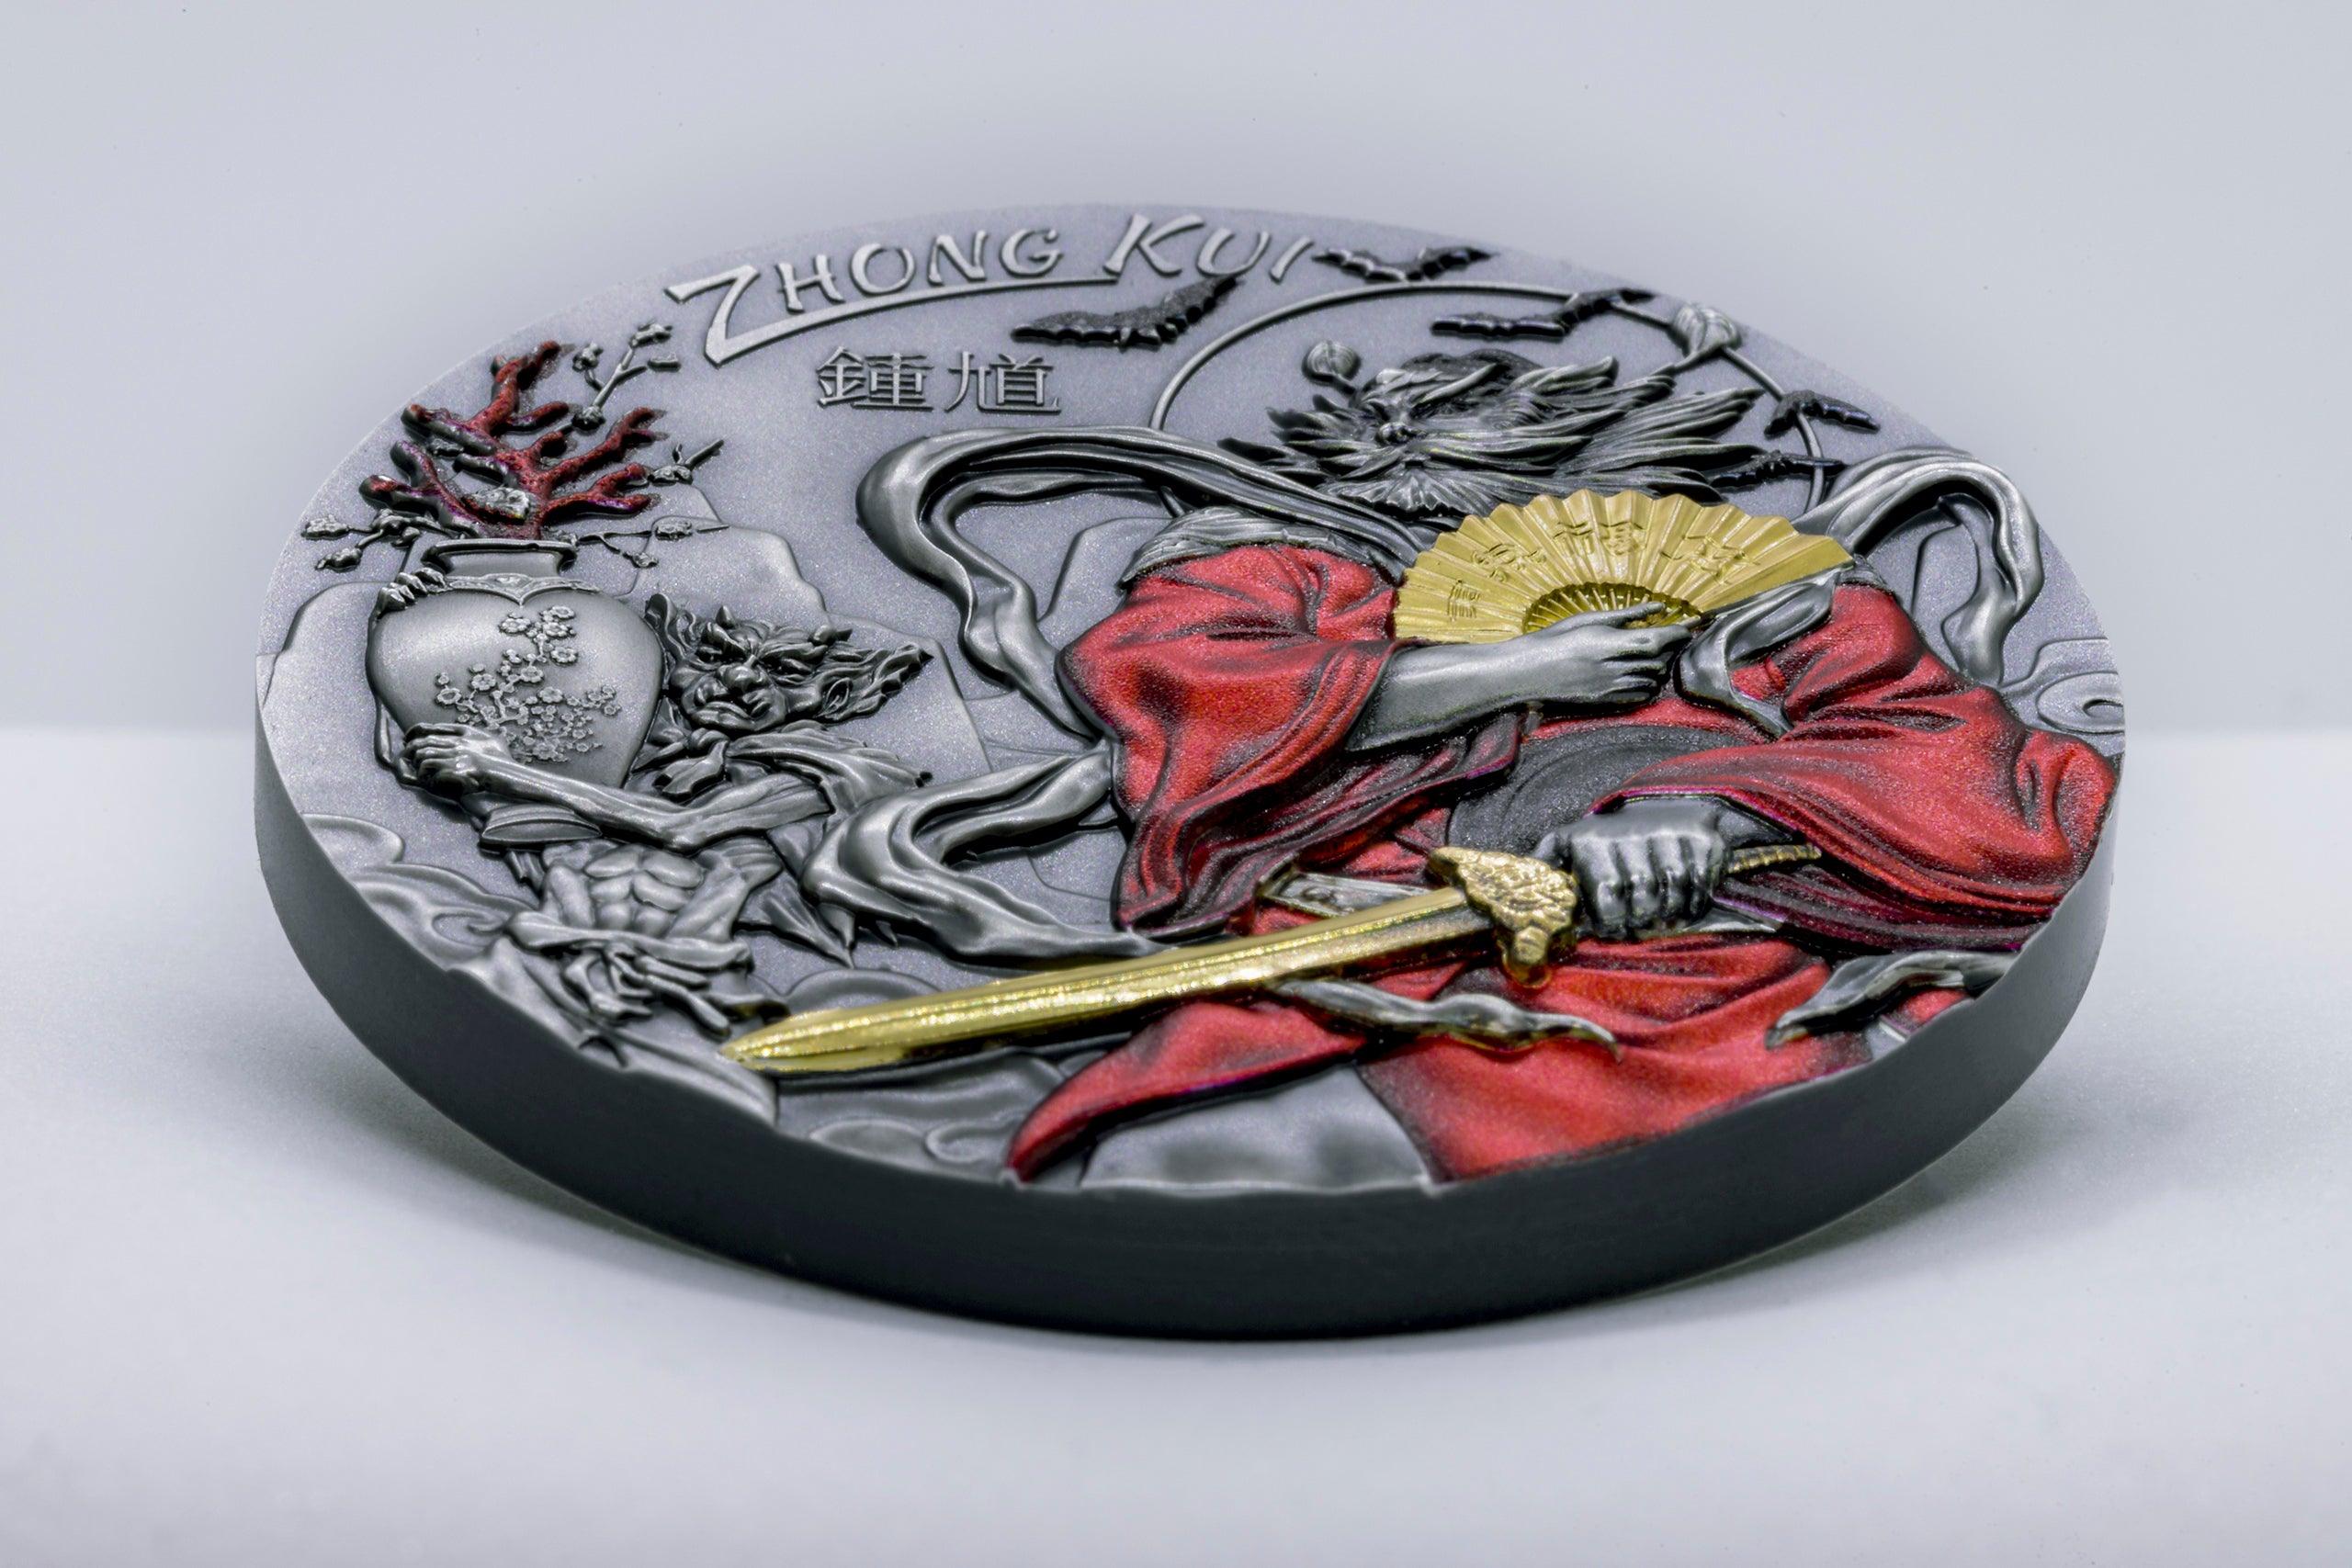 ZHONG KUI Gilded Asian Mythology 3 Oz Silver Coin 20$ Cook Islands 2020 - PARTHAVA COIN